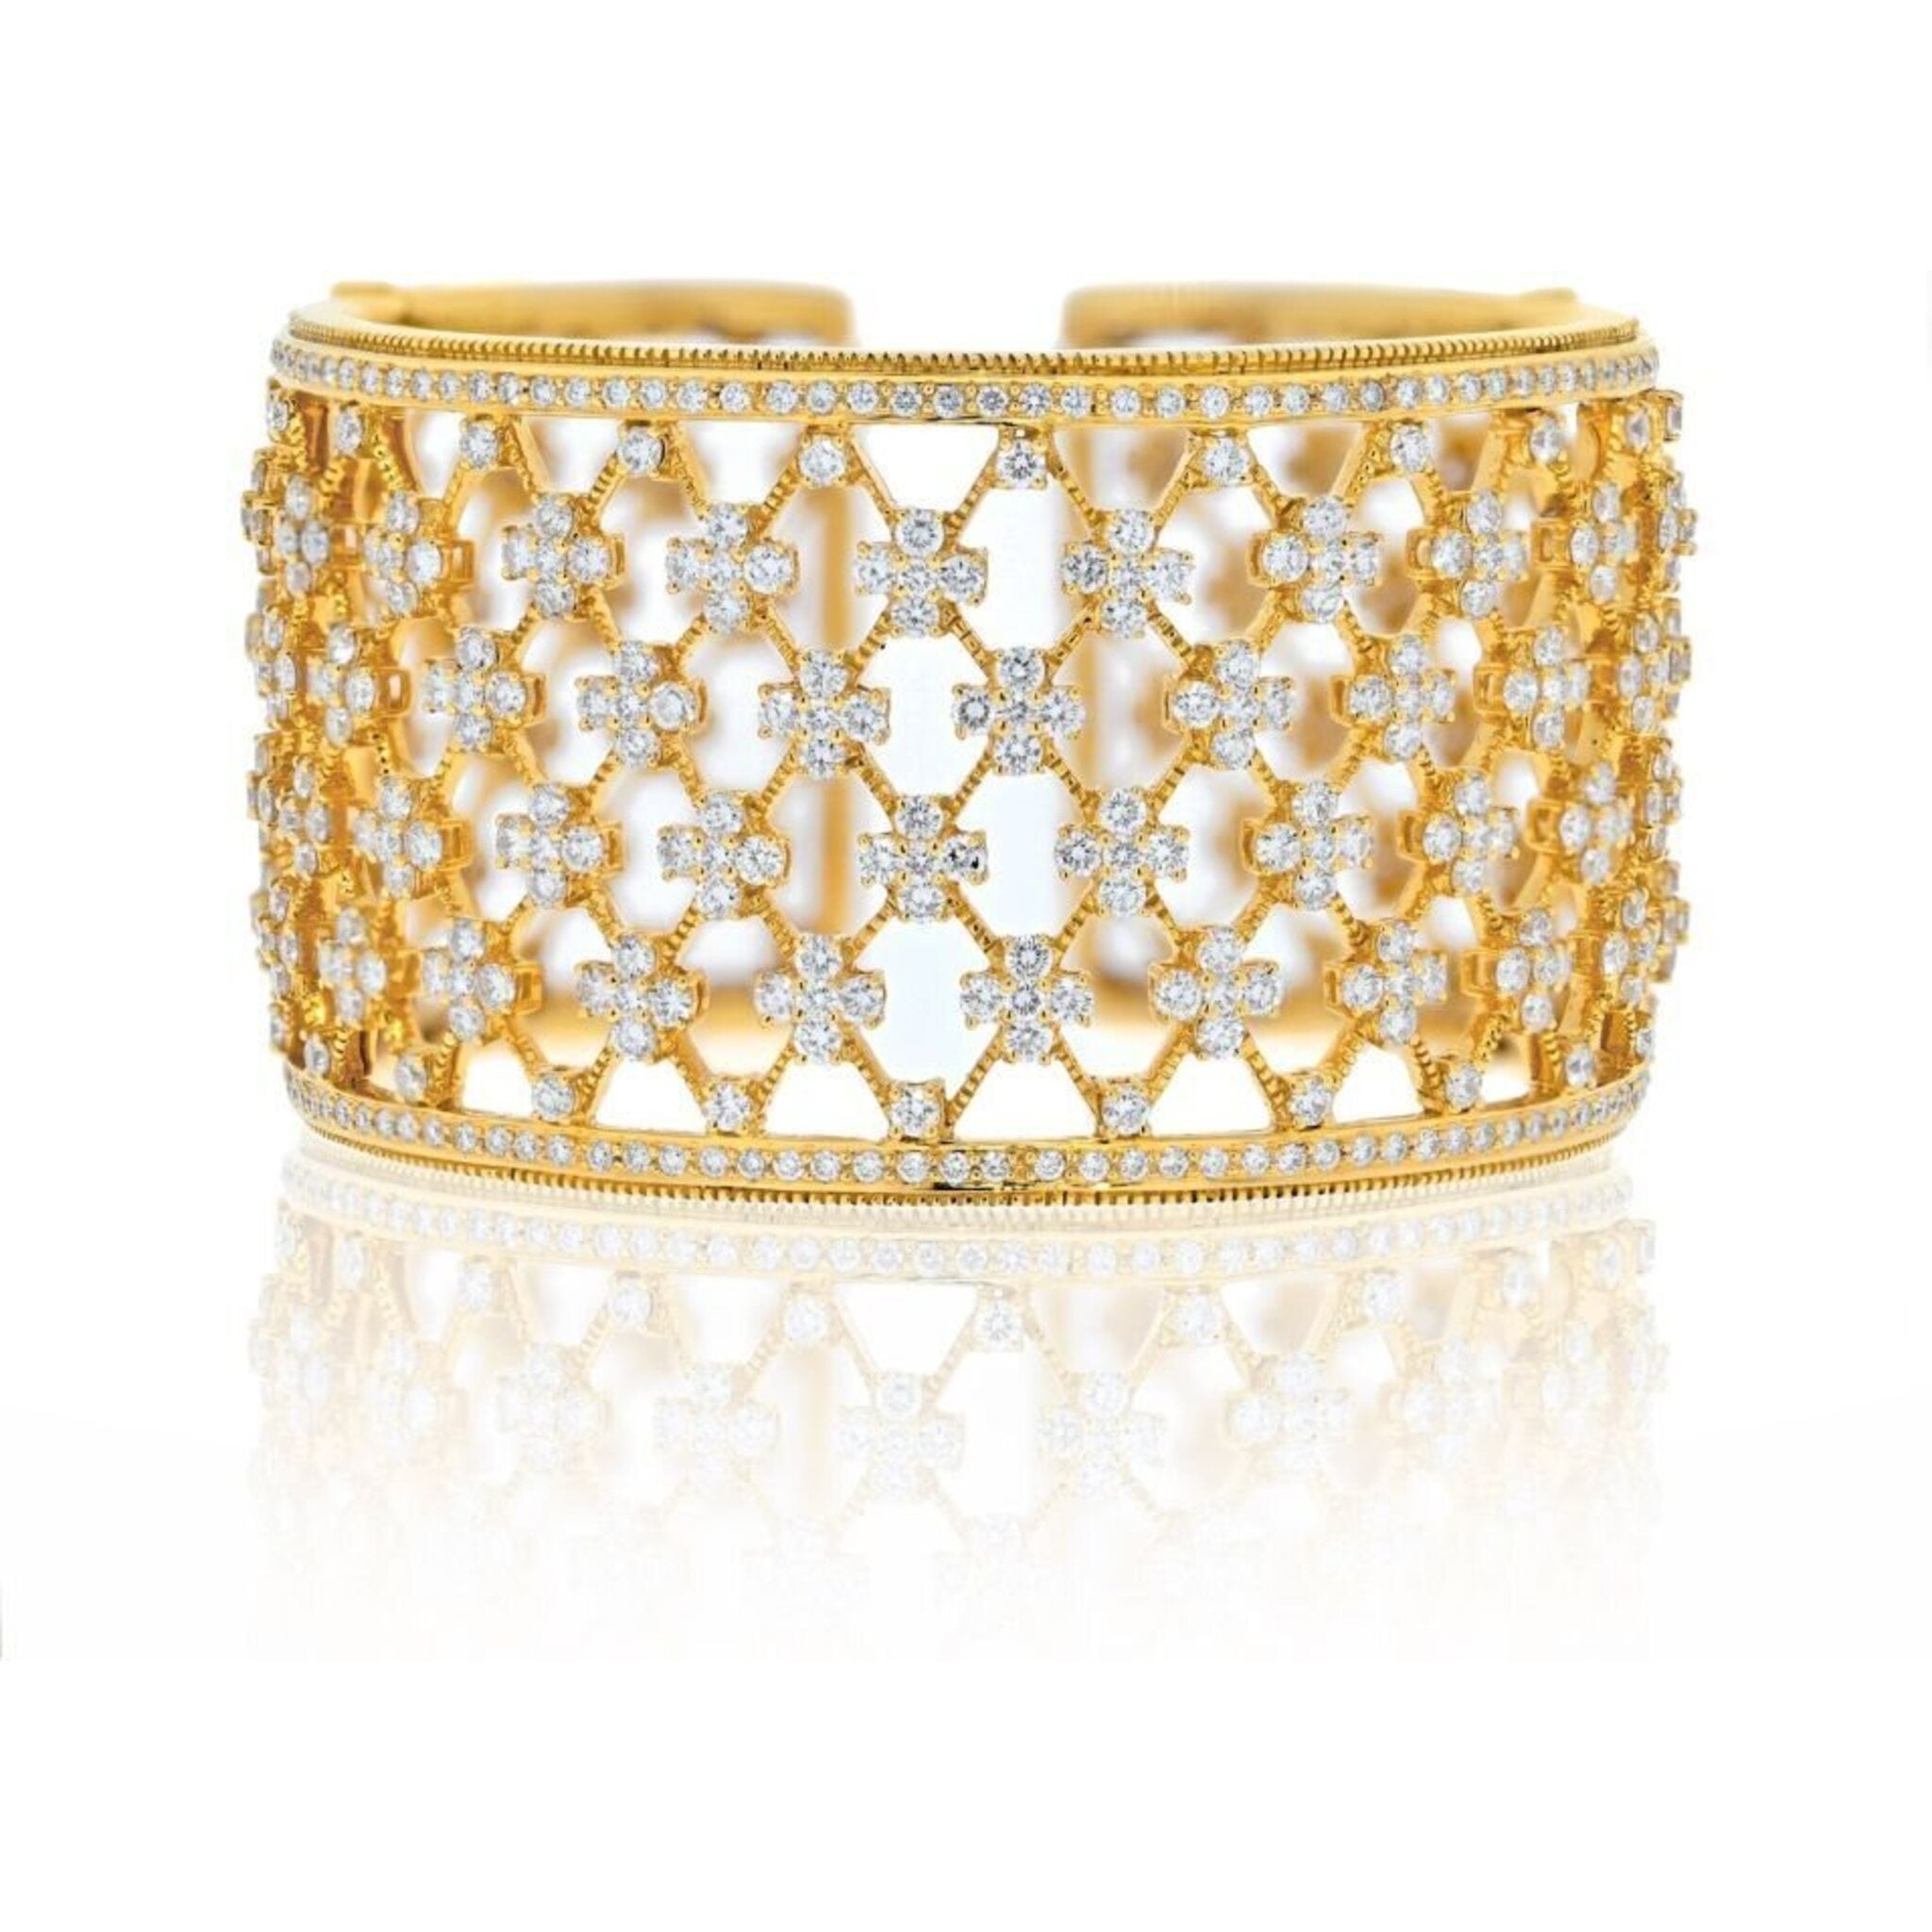 18K Yellow Gold Wide Openwork 32 Carat Diamond Cuff Bracelet